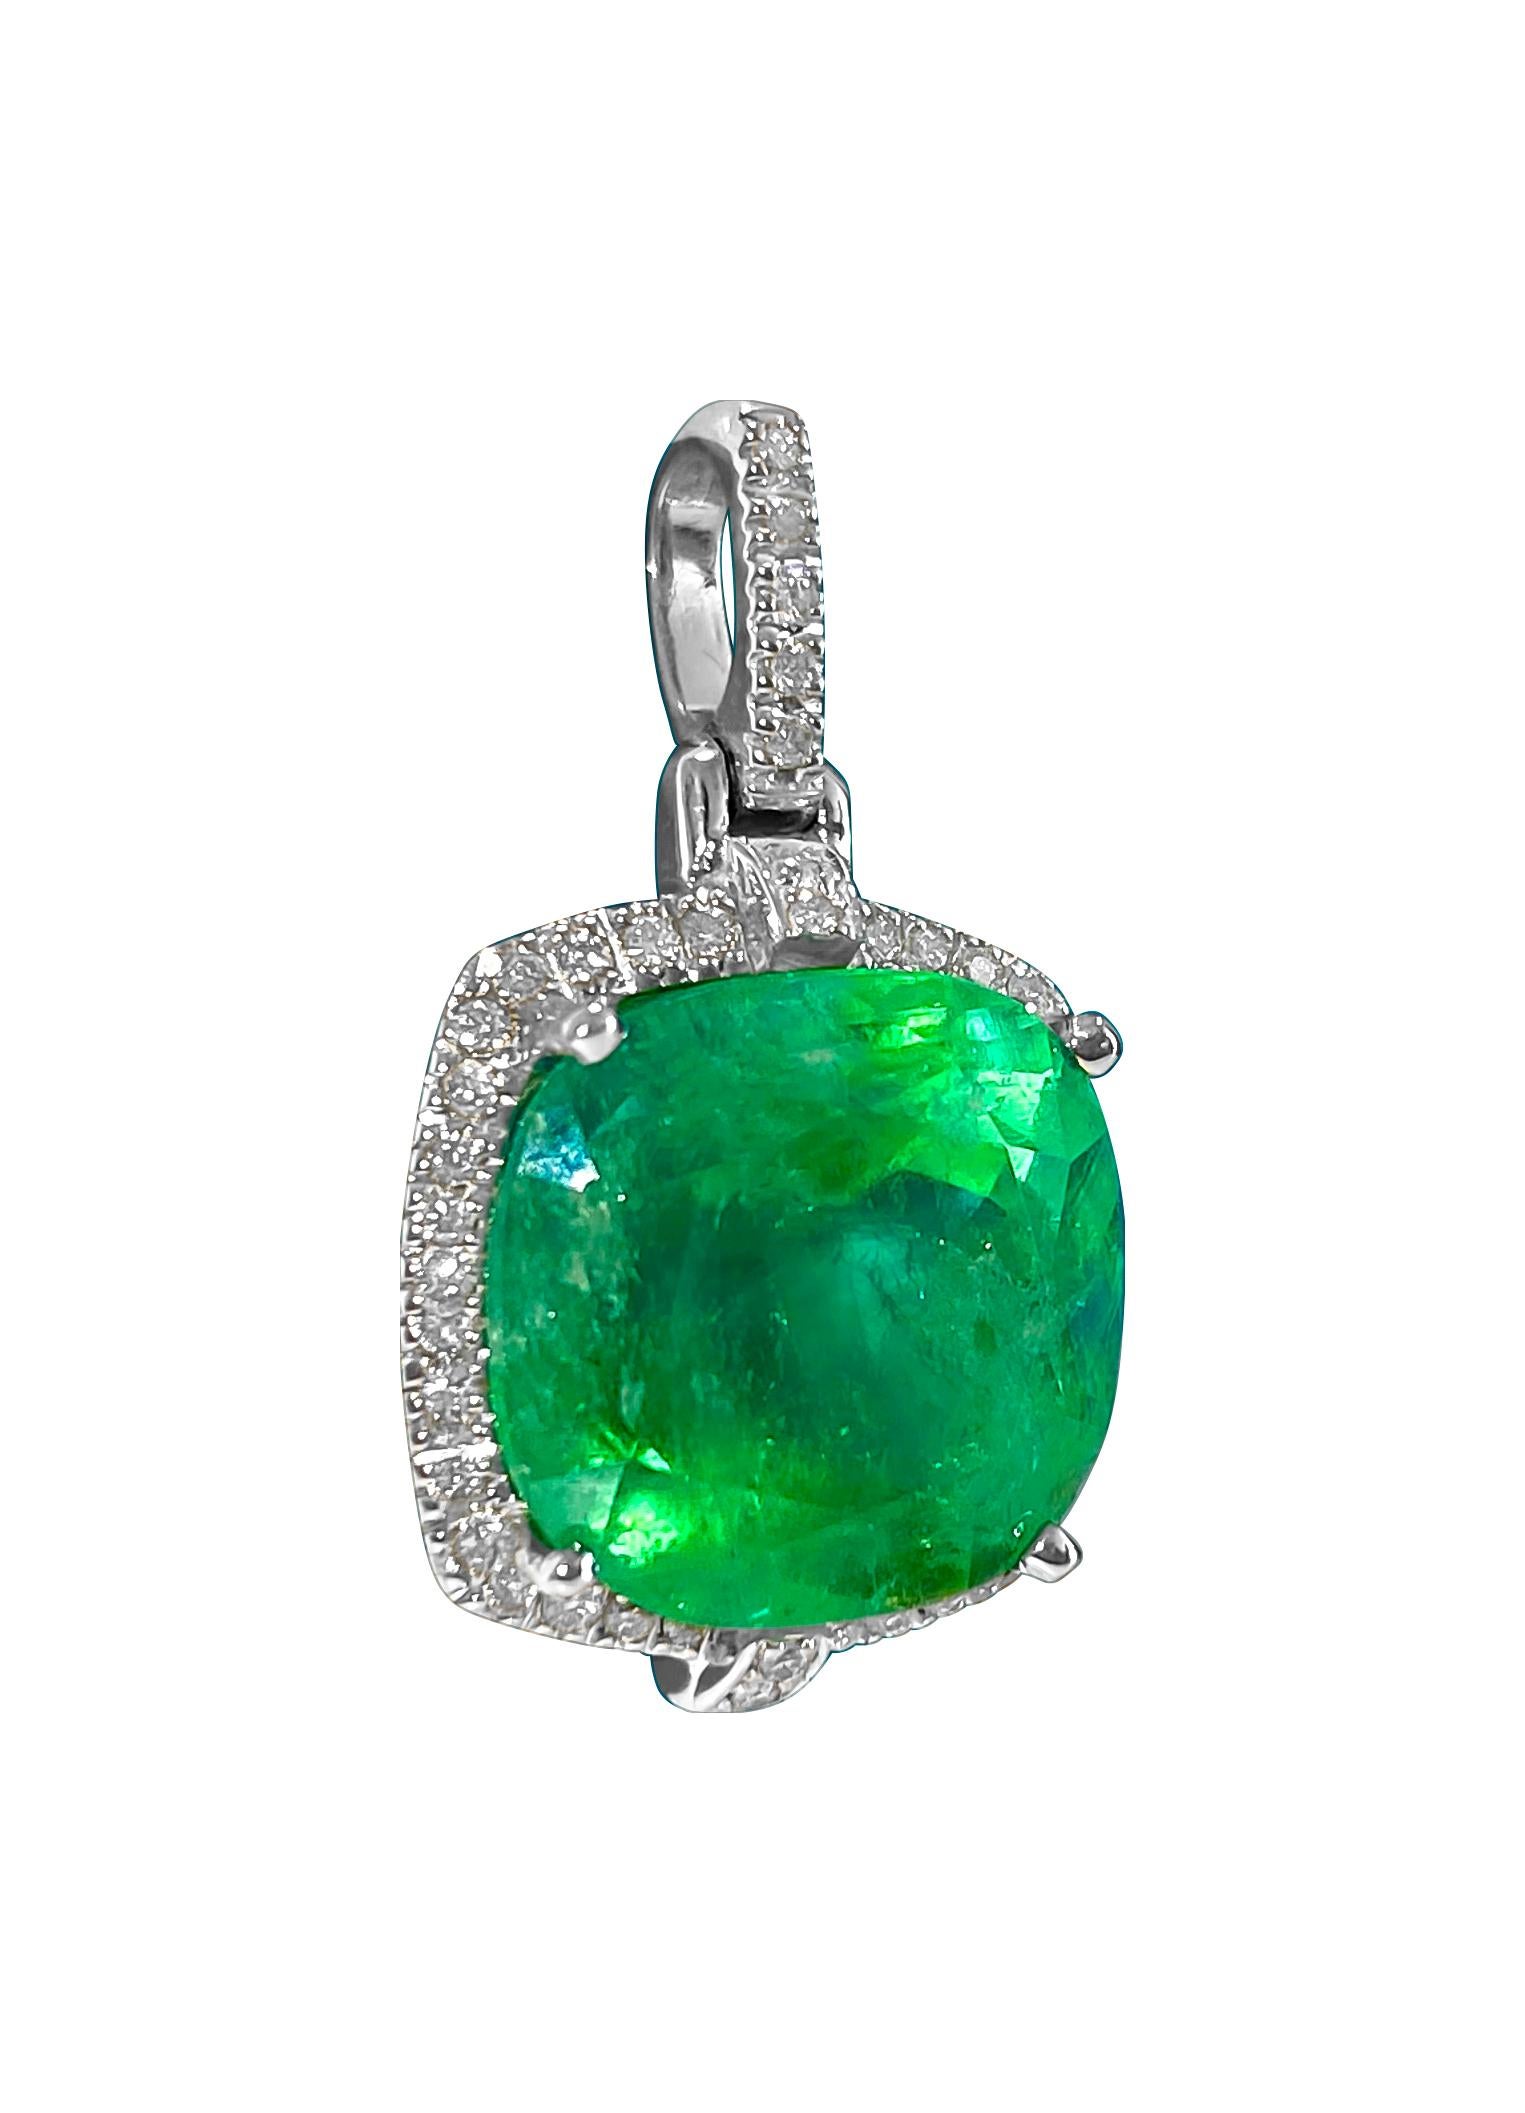 Contemporary 8.90 Carat Colombian Emerald and Diamond Pendant For Sale